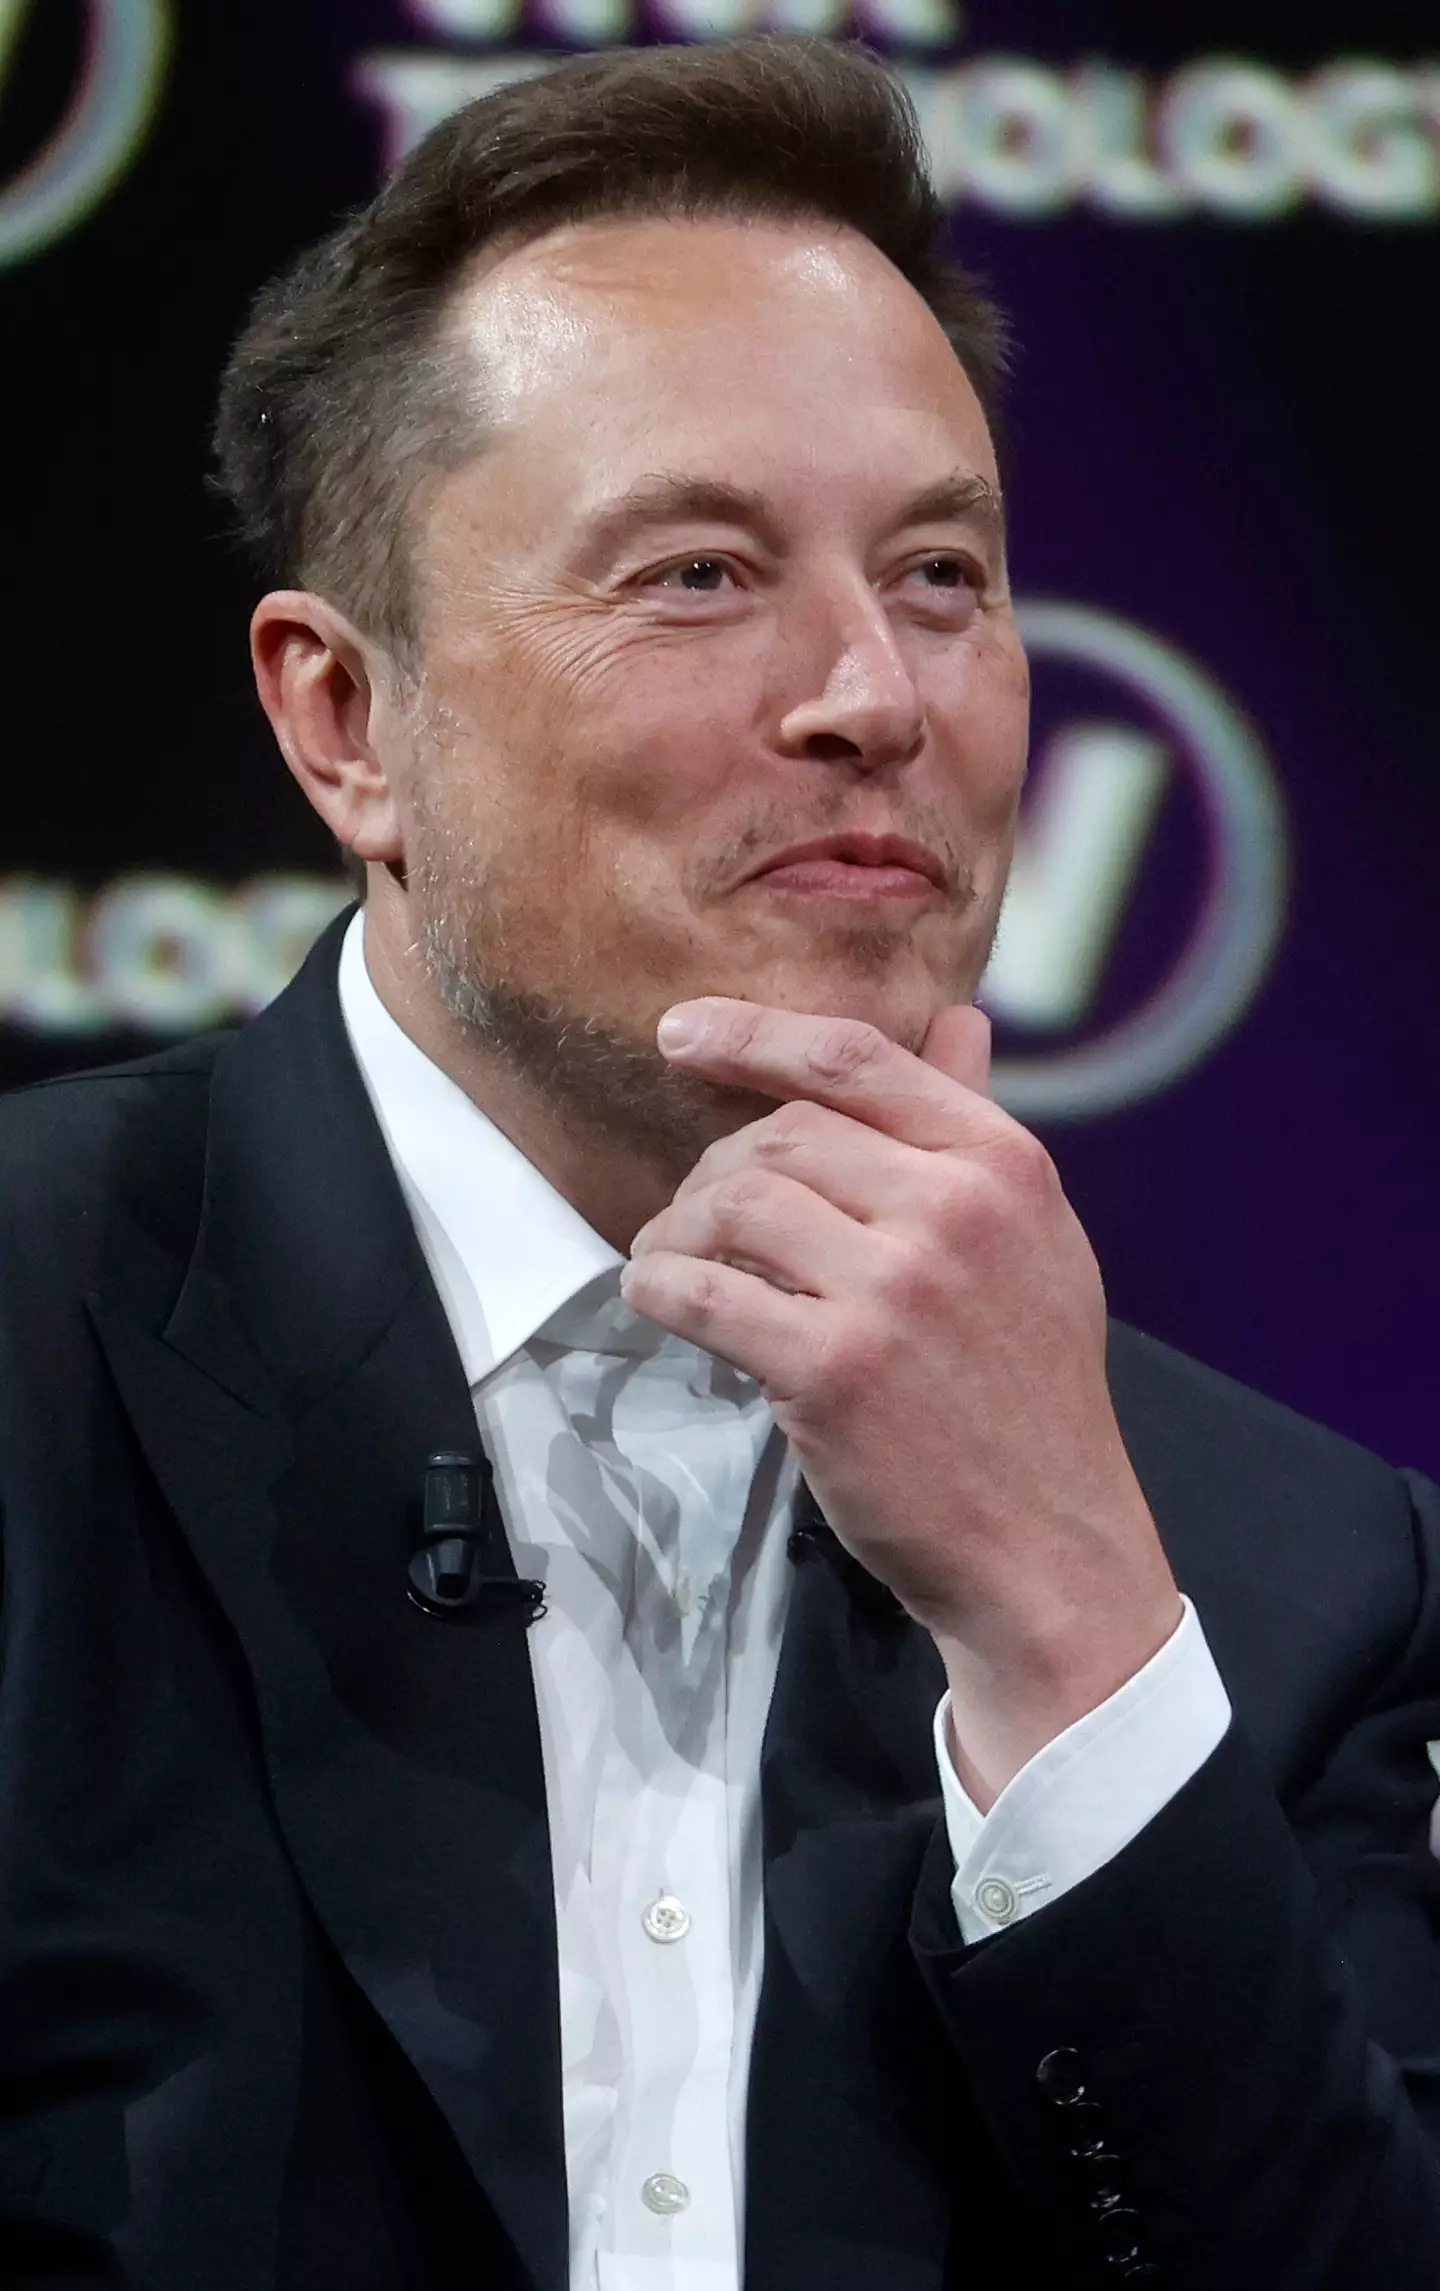 Elon Musk bought the car.